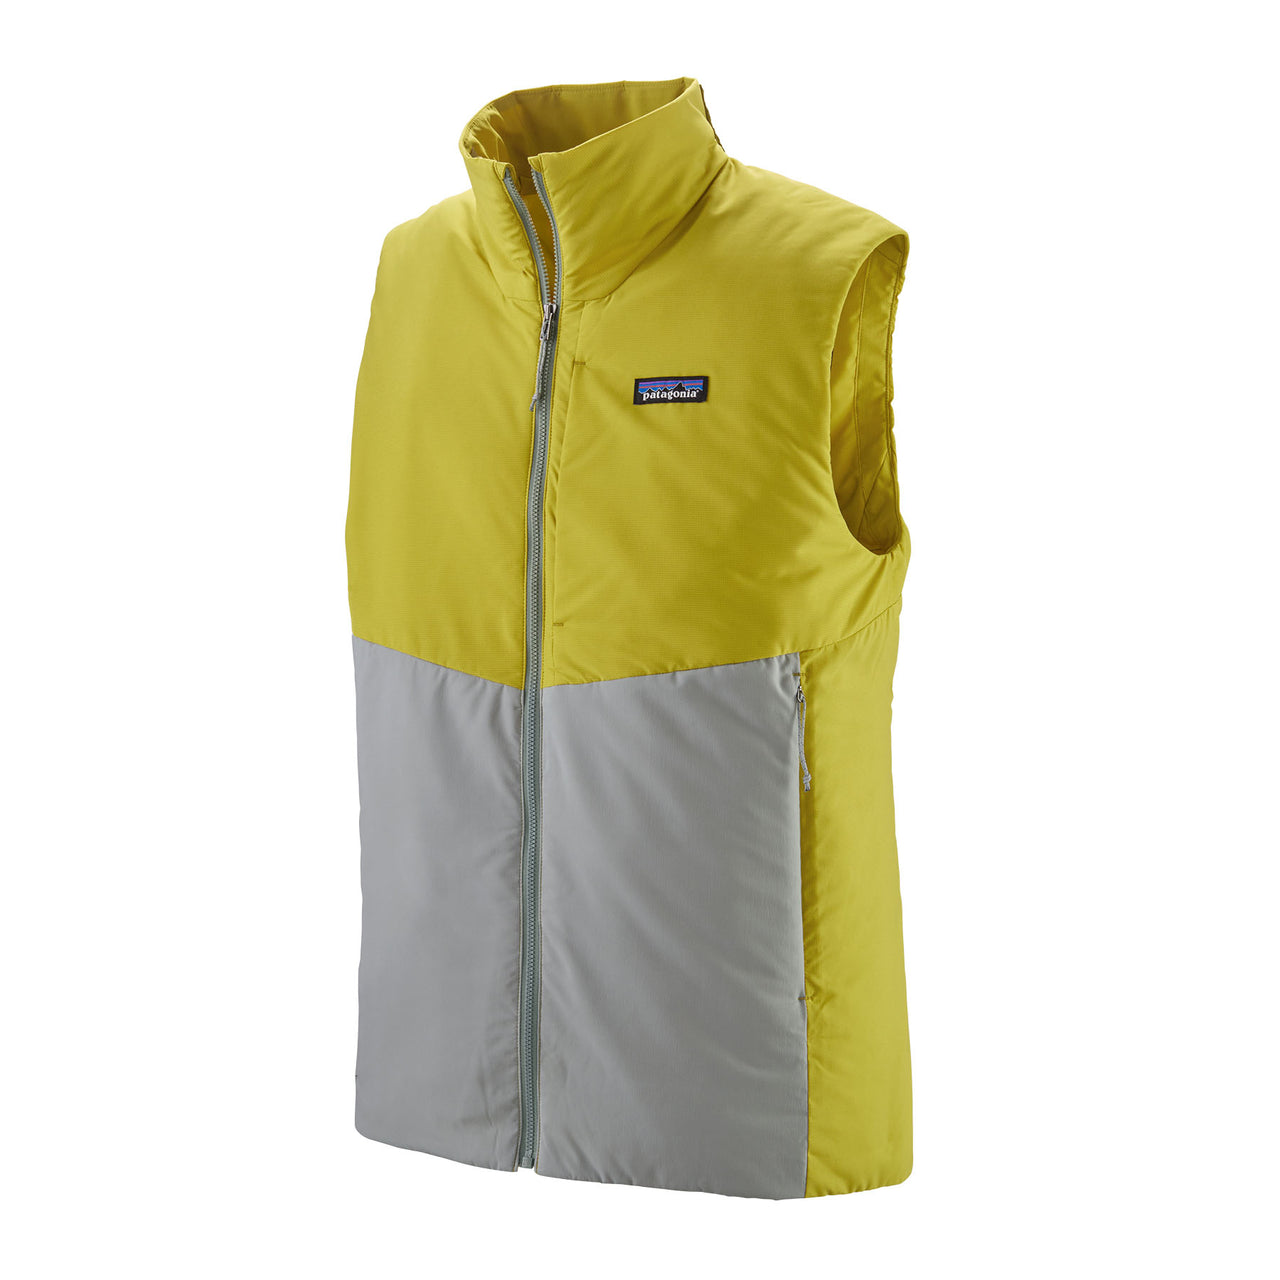 VBXOAE Men's 3D Printed Sports and Leisure Vest Sleeveless Pullover Slim  Fit Vest 